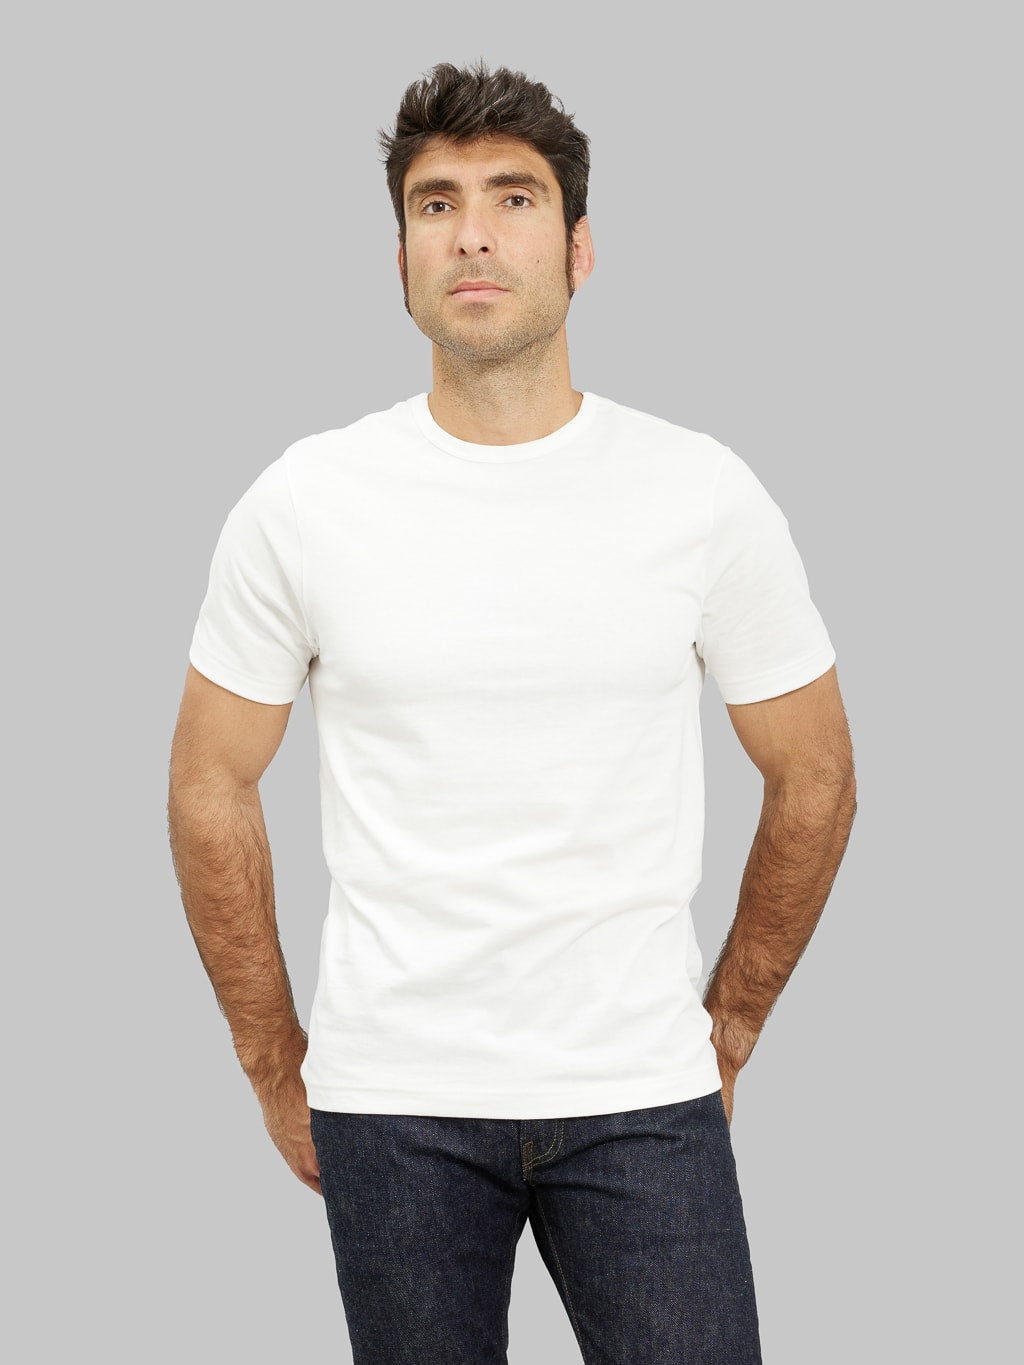 Merz b. Schwanen 1950s 5.5oz Loopwheeled Classic Fit T-Shirt White